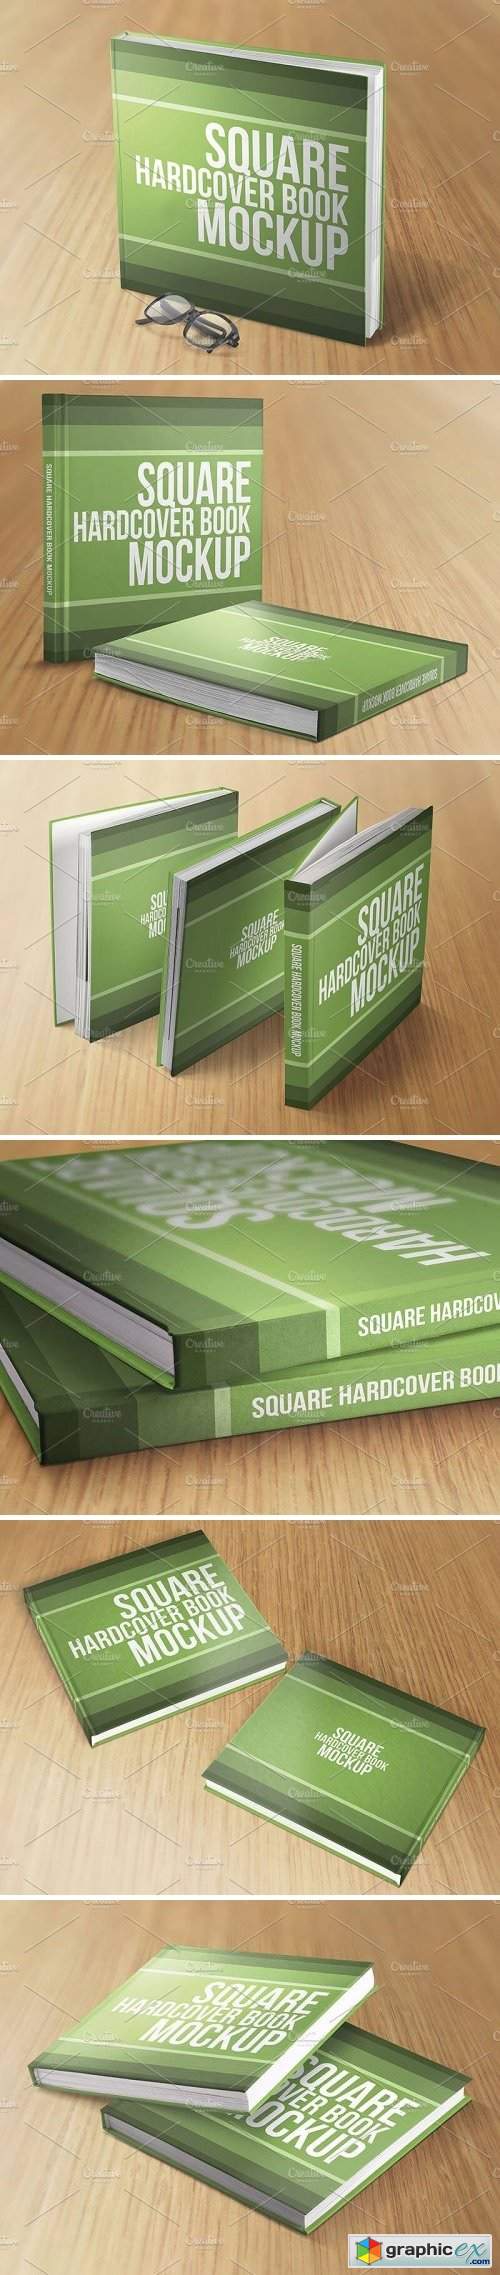 Square Hardcover Book Mockups